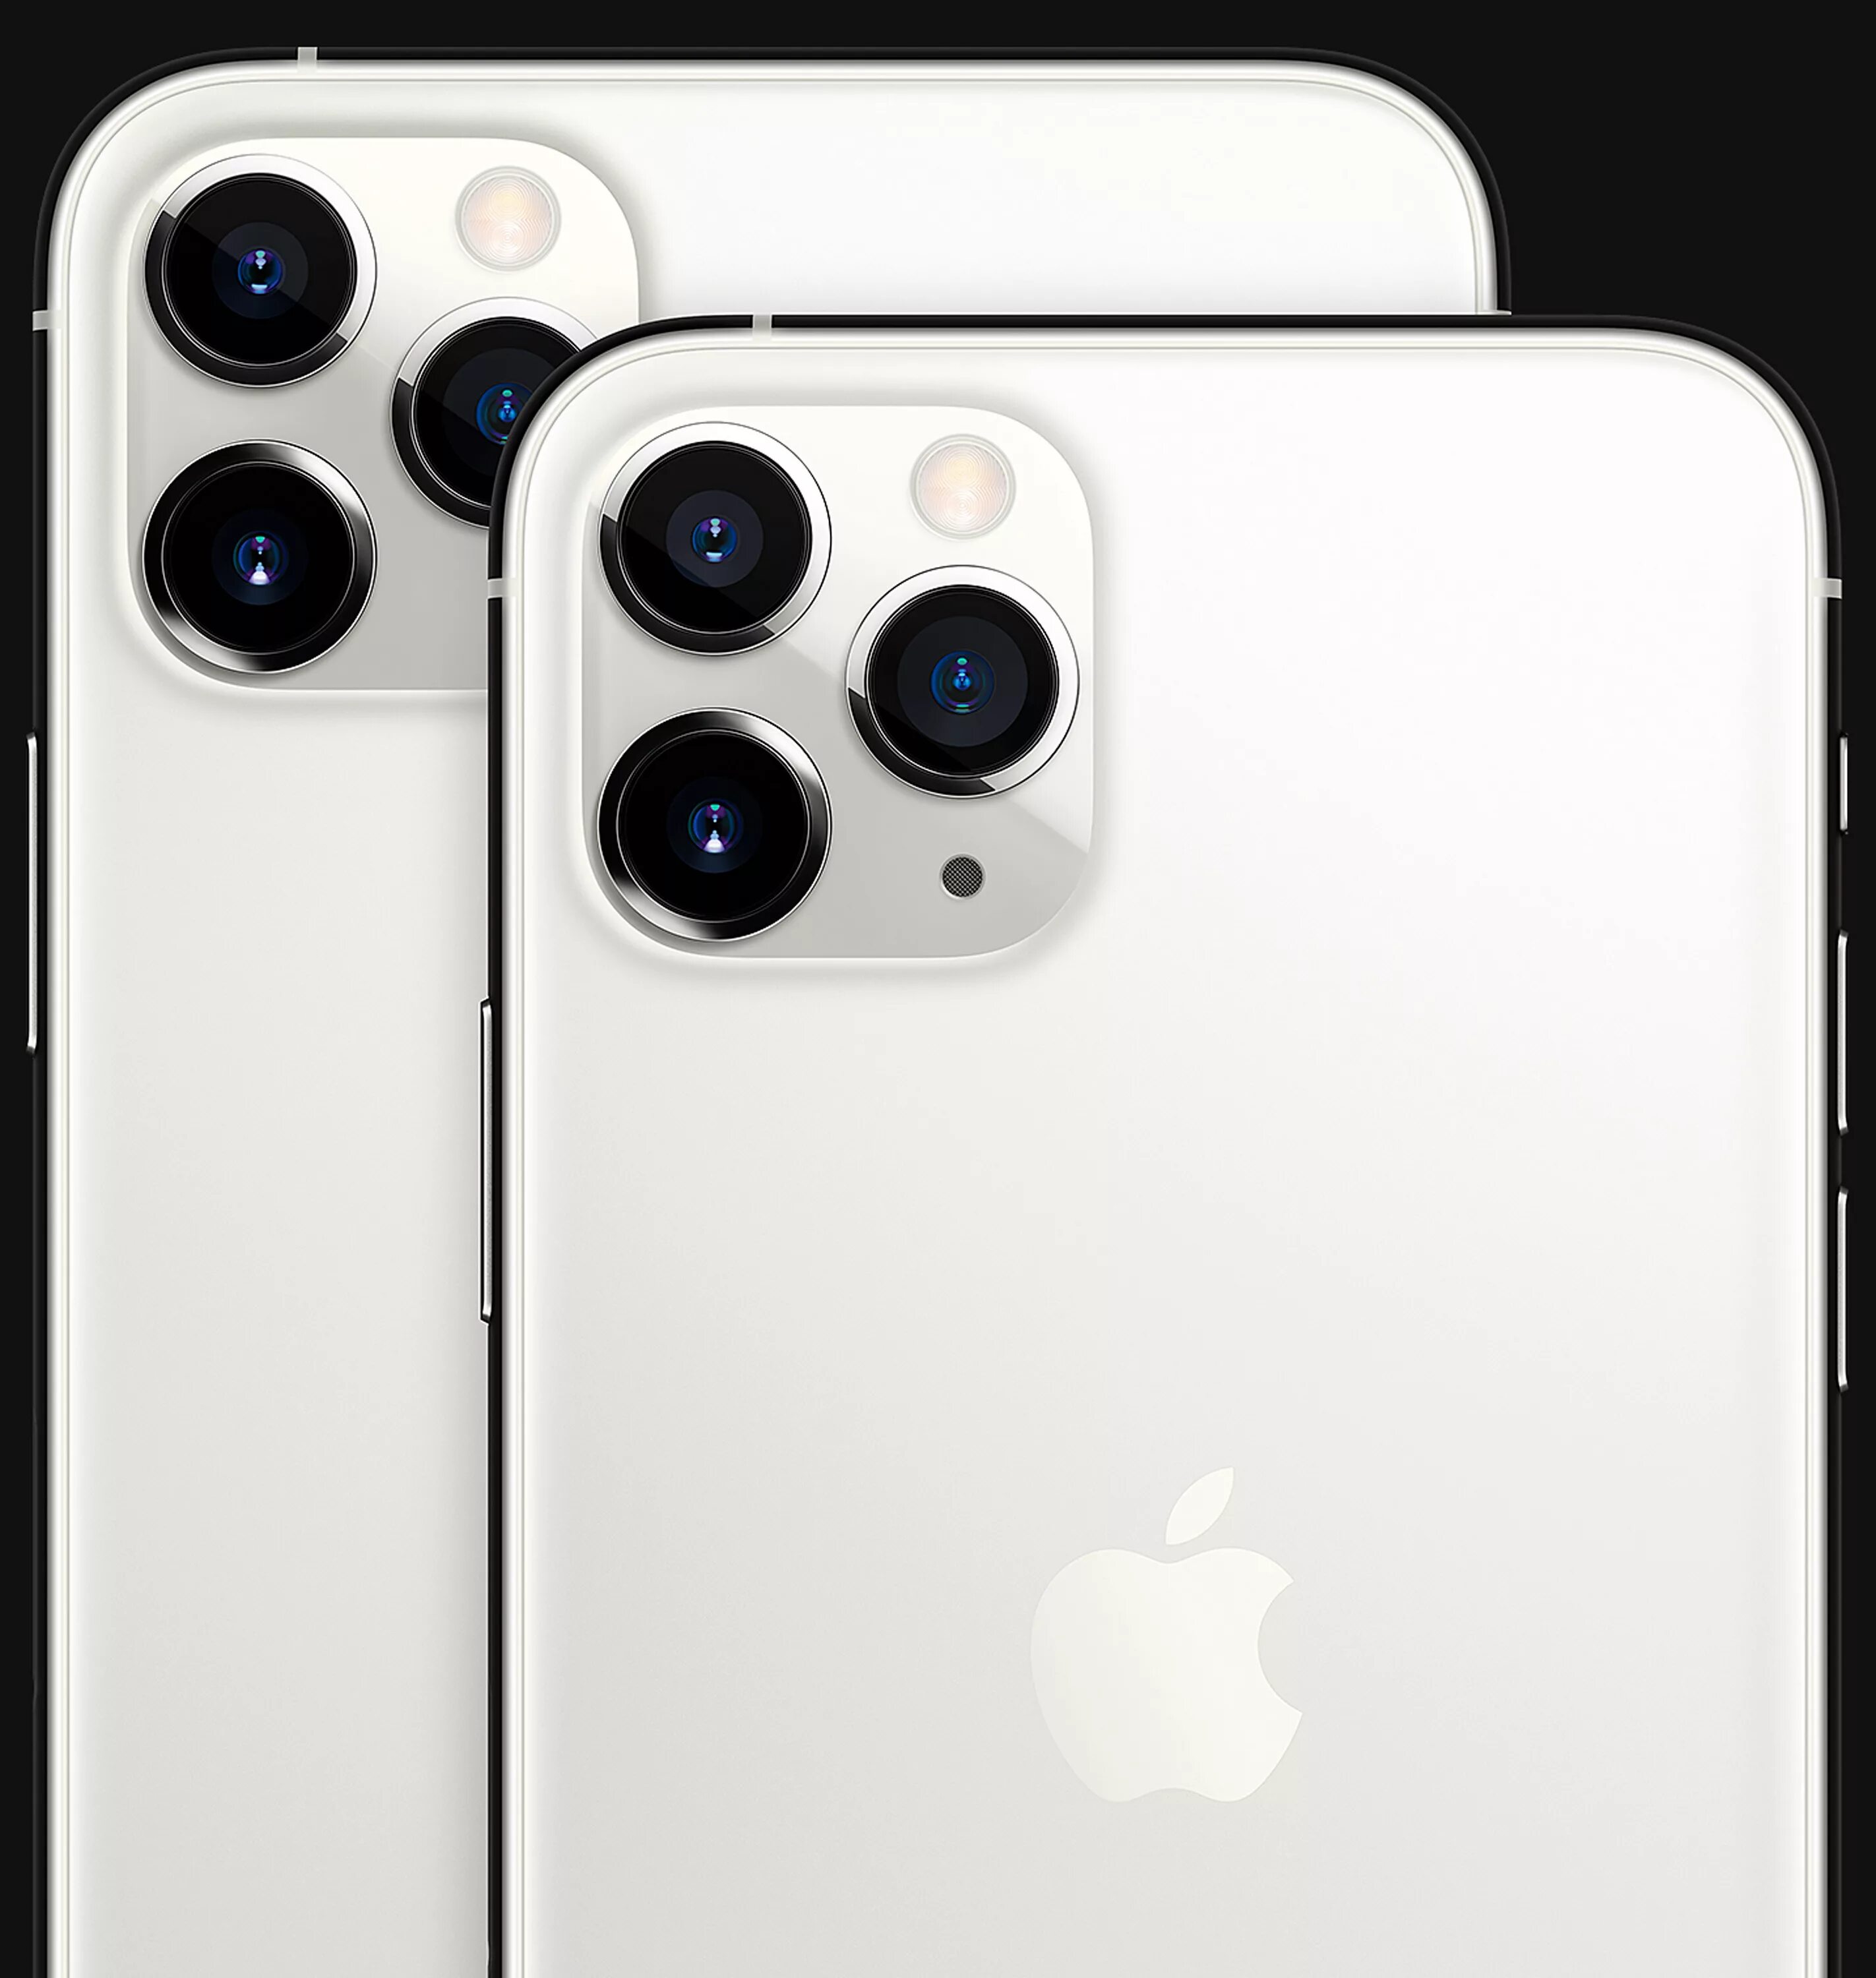 Айфон 11 вологда. Iphone 11 Pro Max Silver. Айфон 12 Промакс белый. Айфон 11 Промакс белый. Айфон 13 Промакс белый.